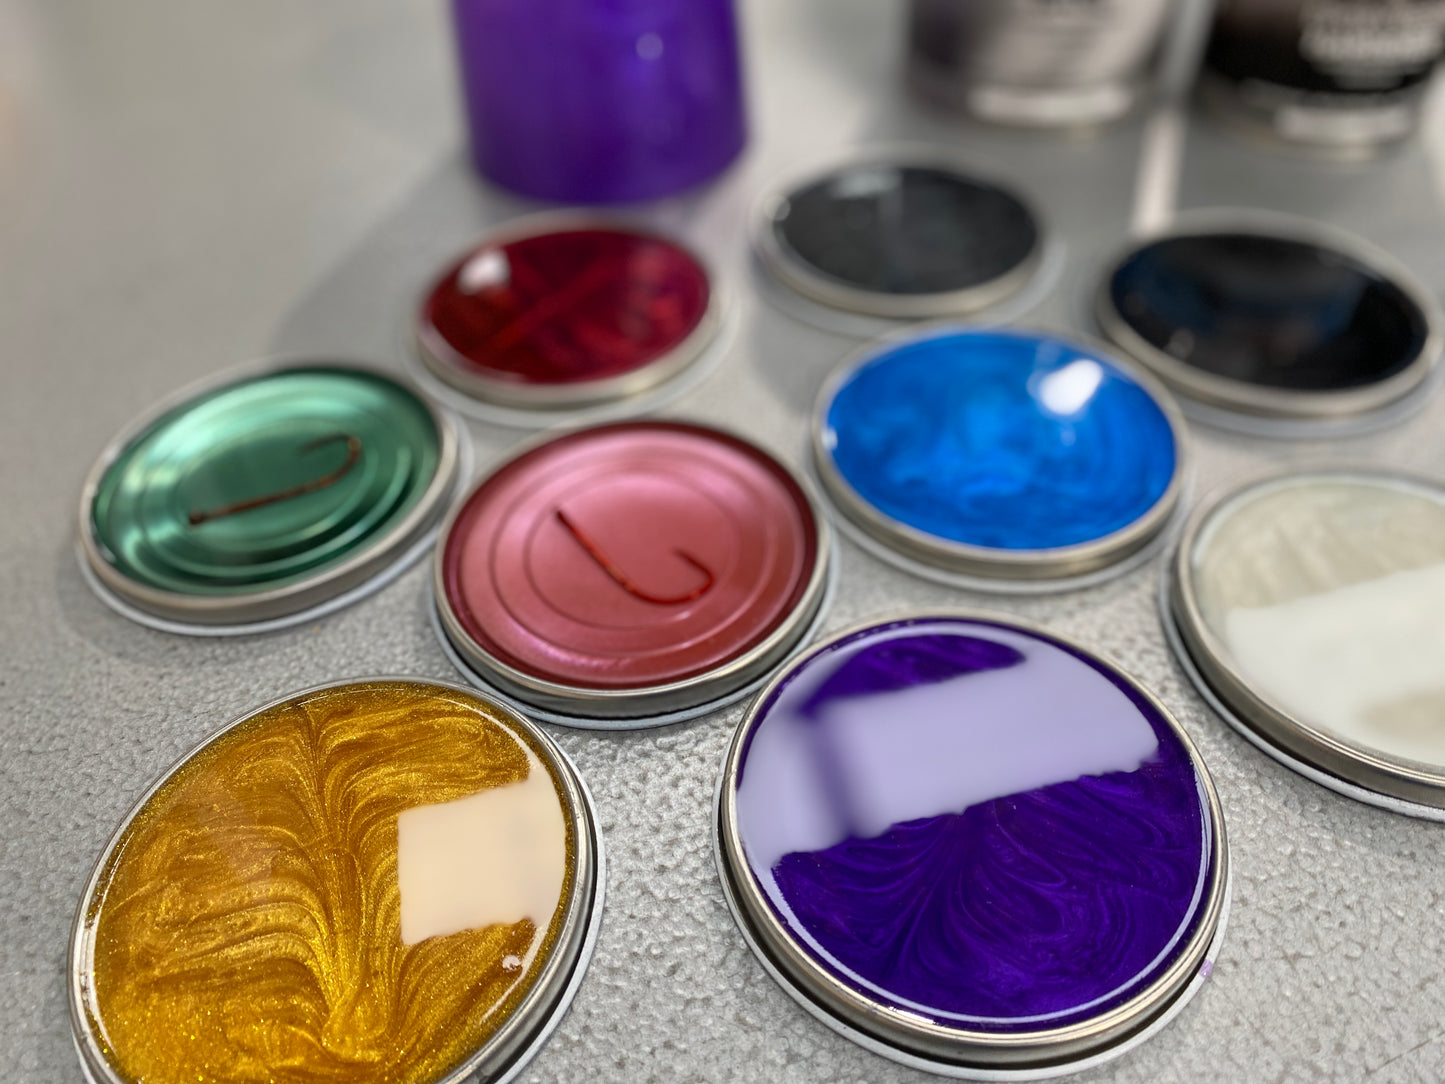 Norglass Liquid Glass Colourant - Crockers Paint & Wallpaper